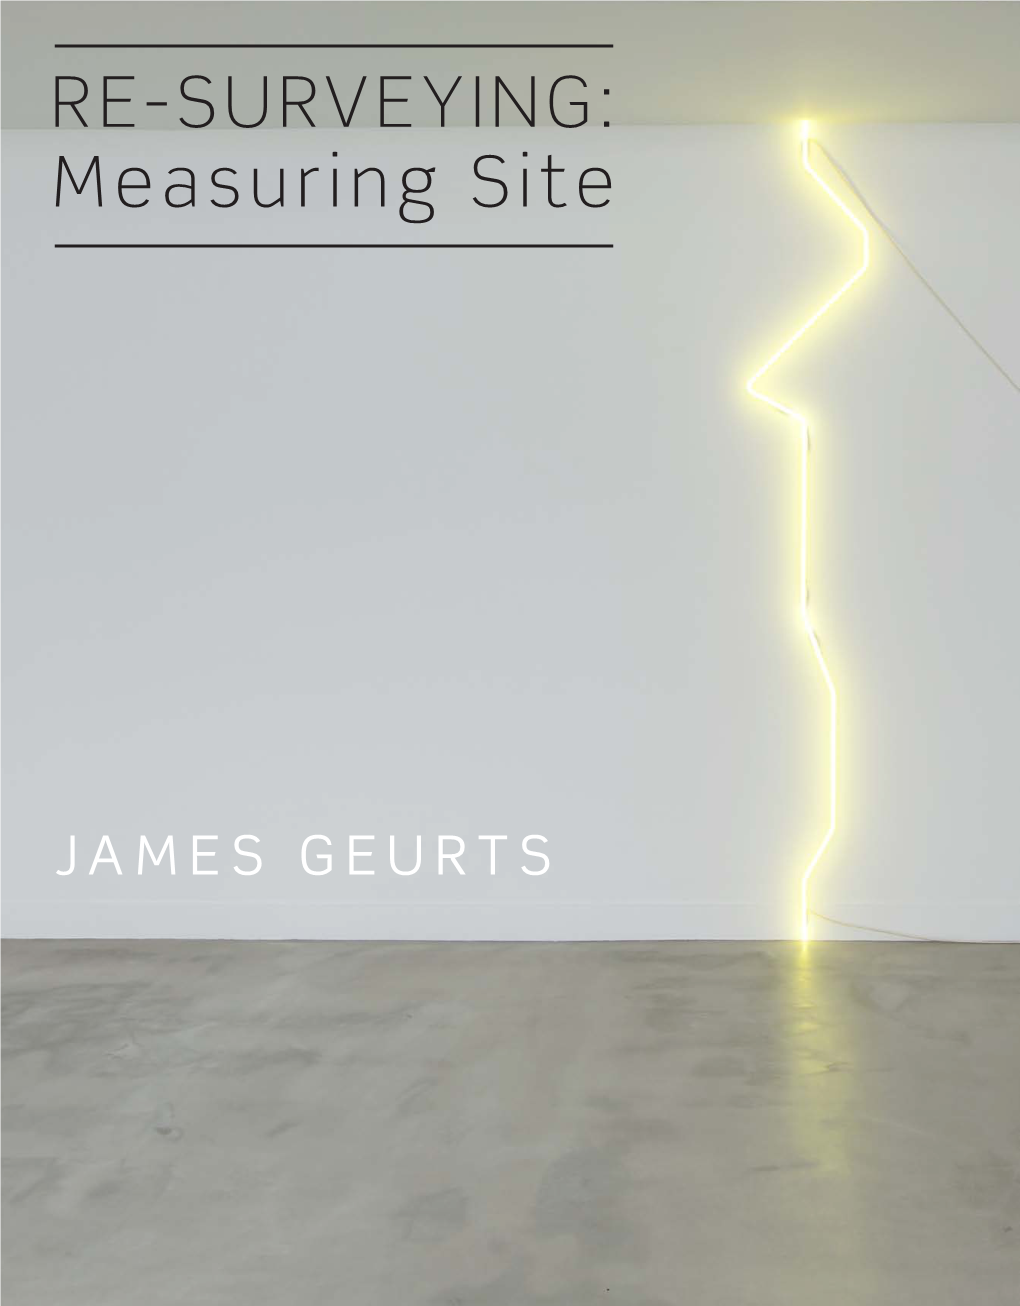 RE-SURVEYING: Measuring Site